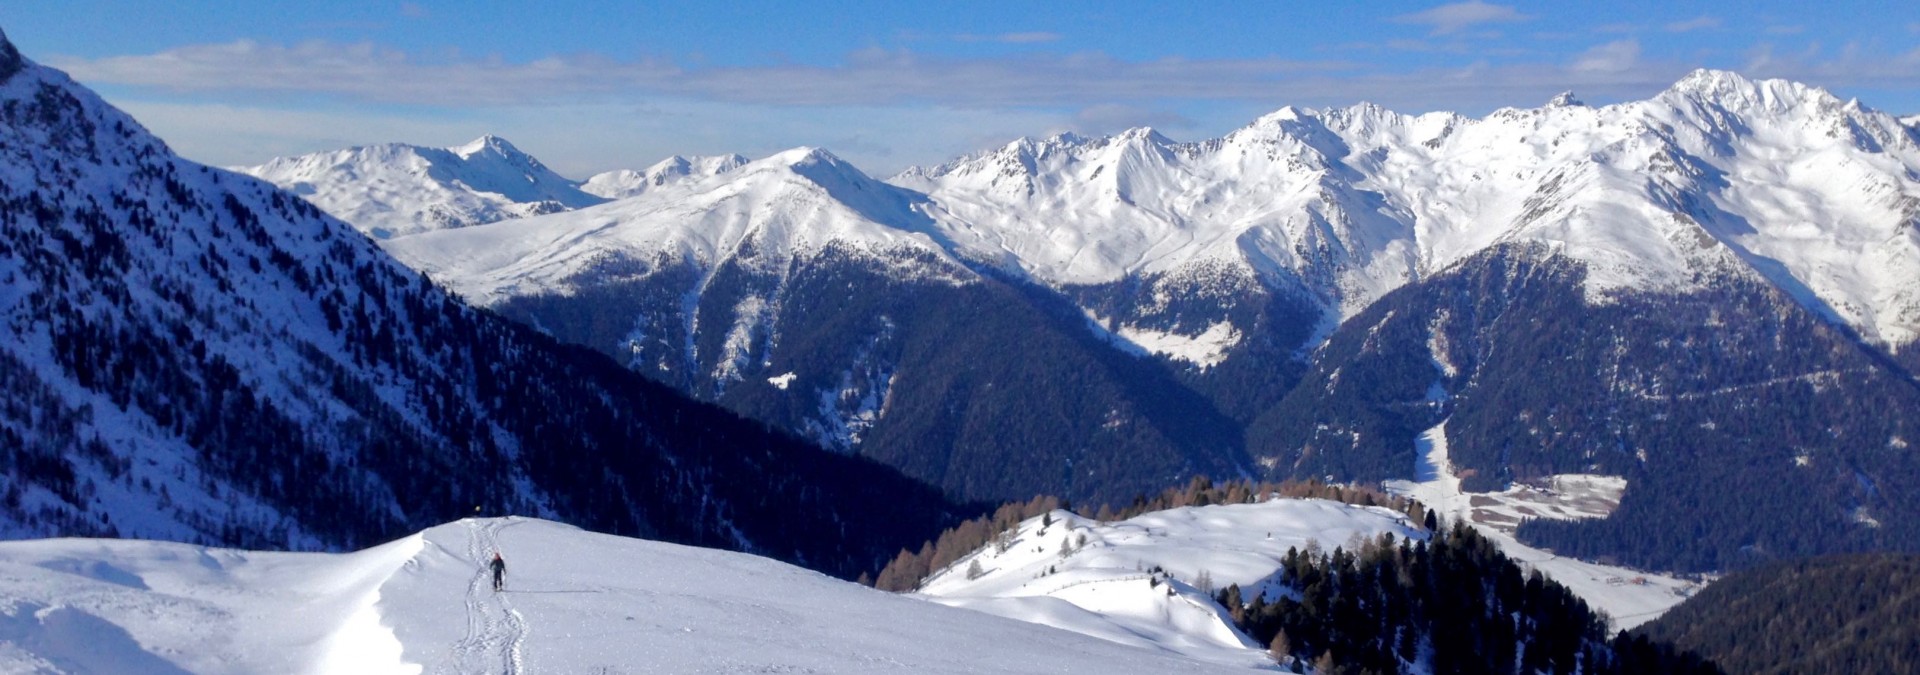 Italian Dolomites Snowshoe